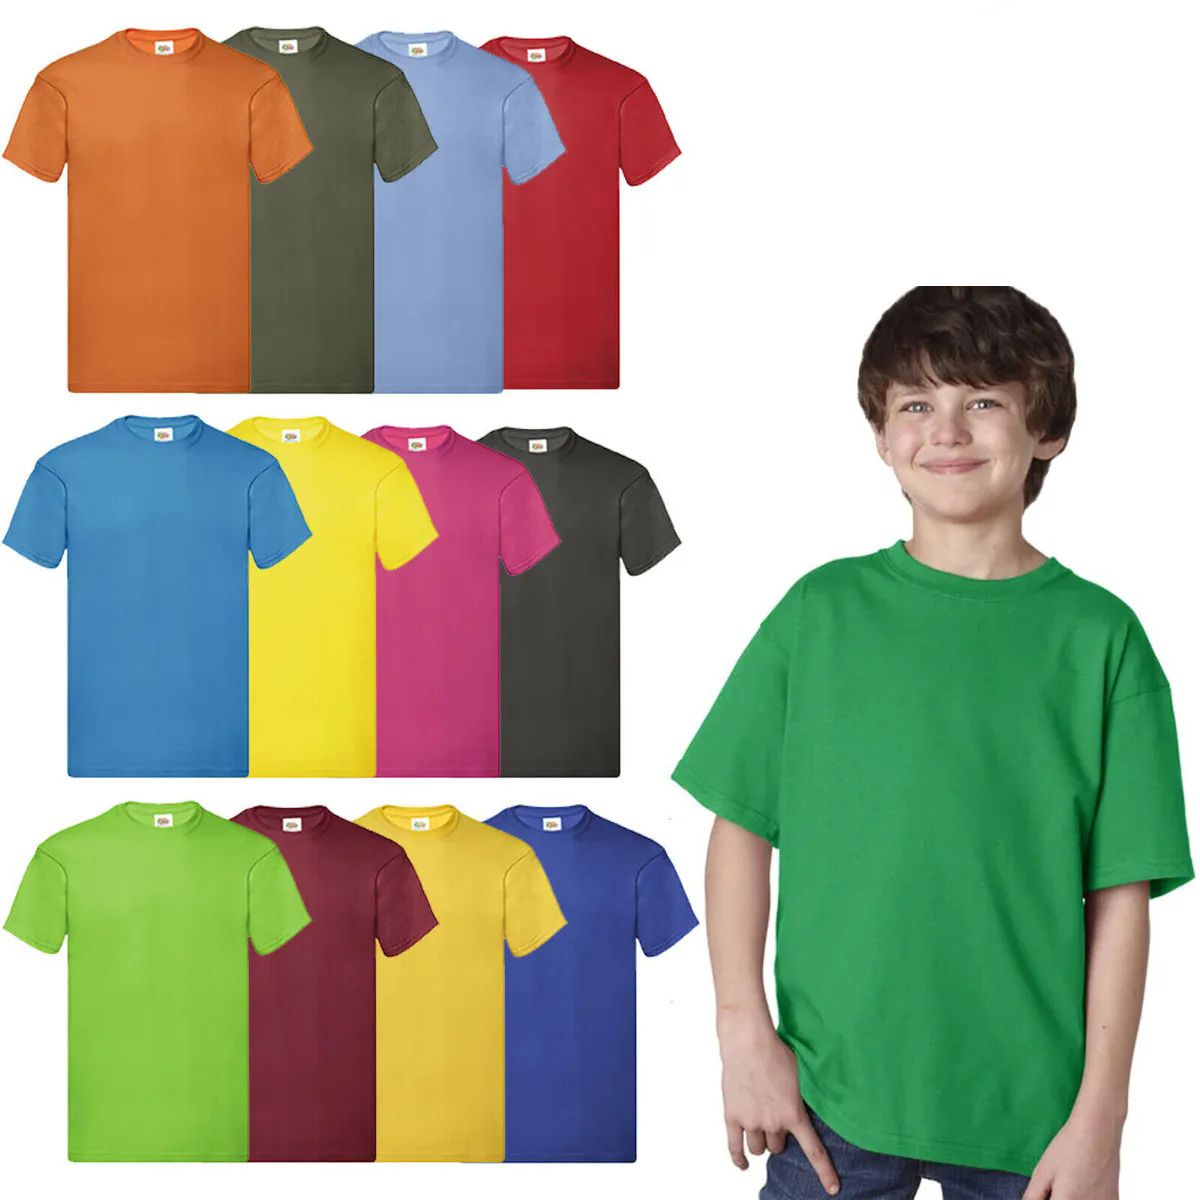 72 Wholesale Billion Hats Kids Youth Cotton Assorted Colors T Shirts Size S